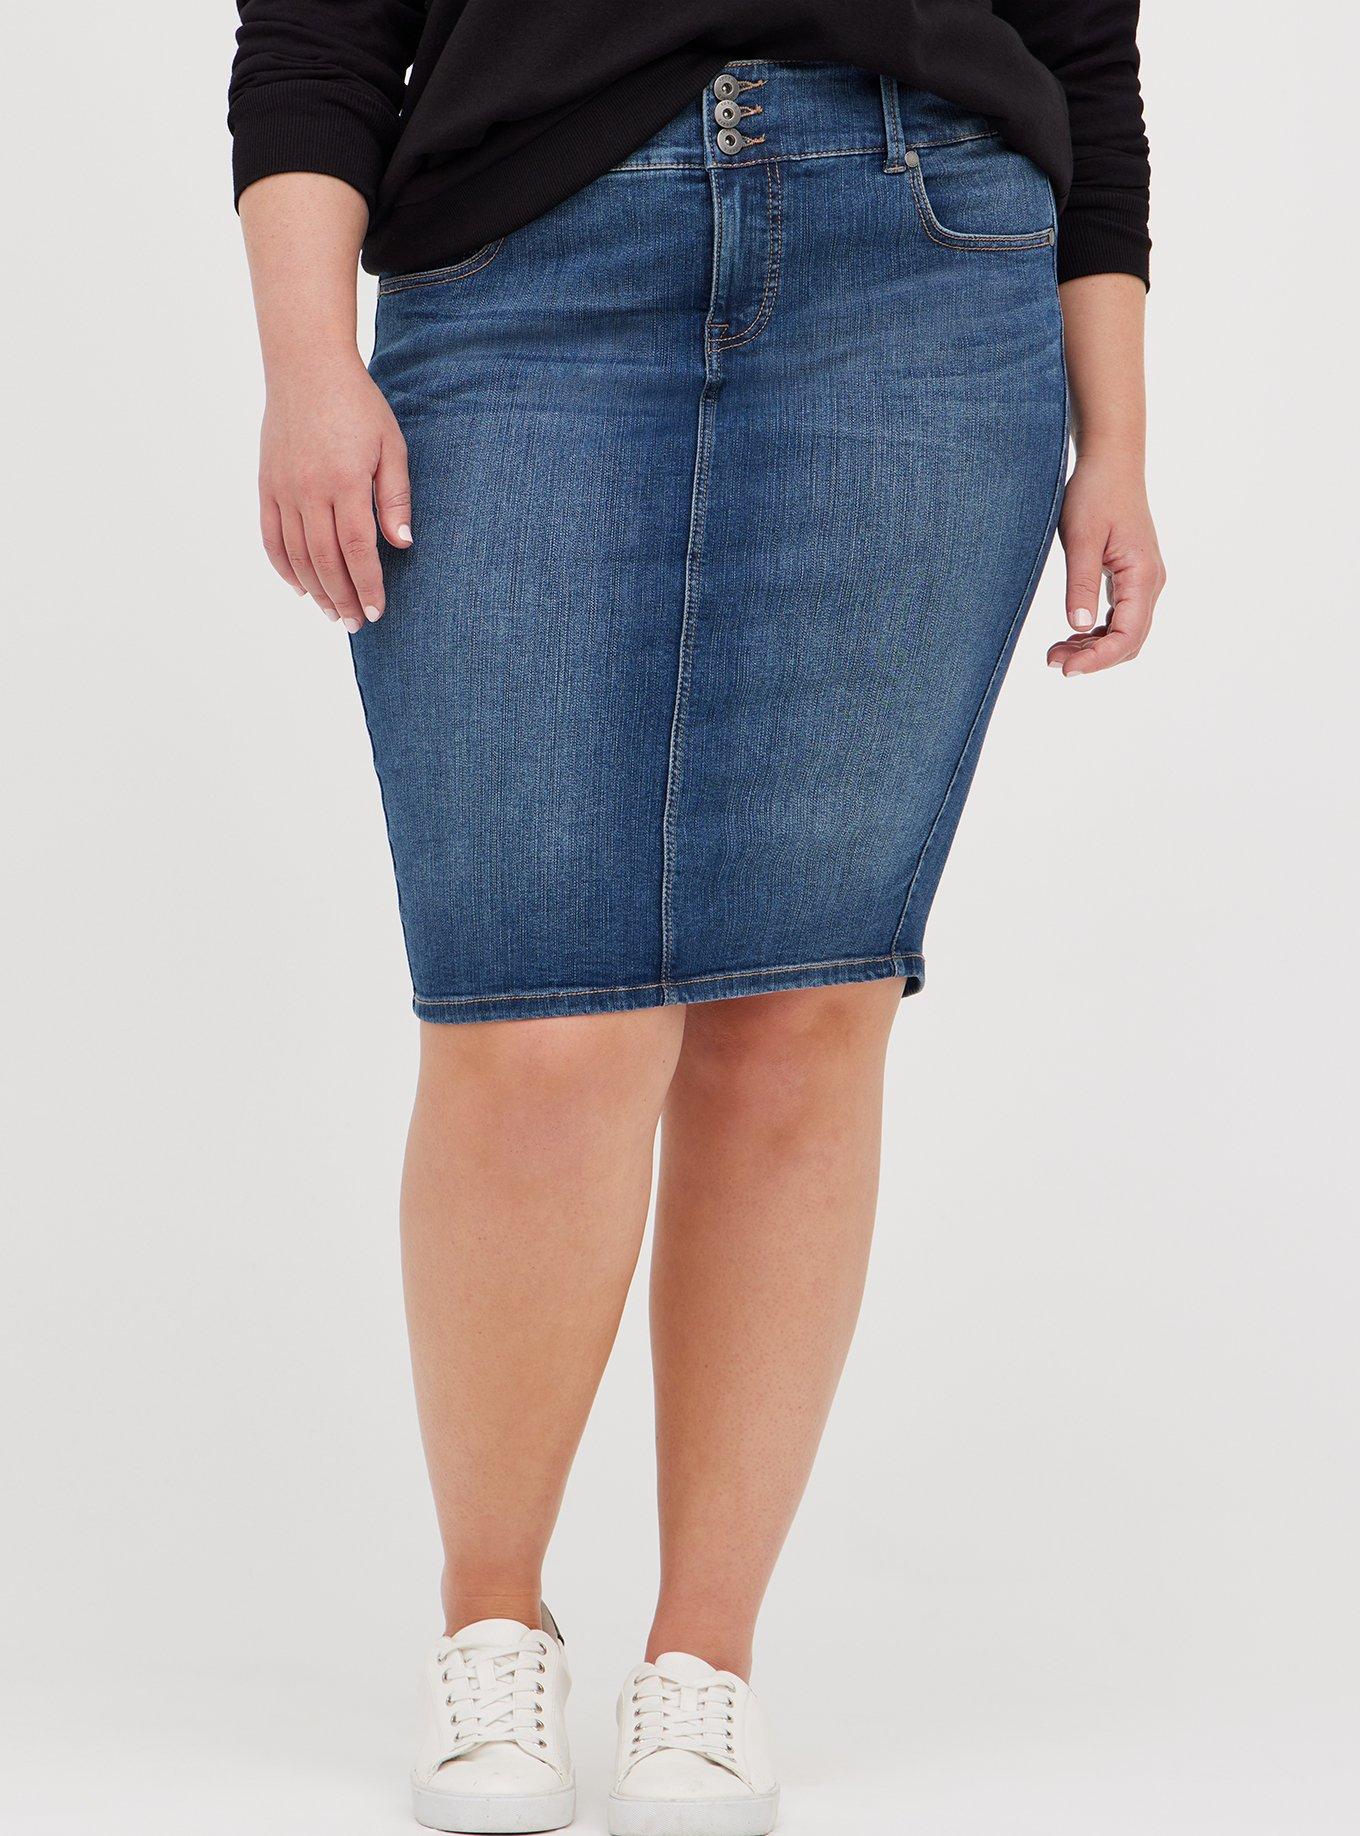 Plus Size - Jegging Denim Midi Skirt - Medium Wash - Torrid